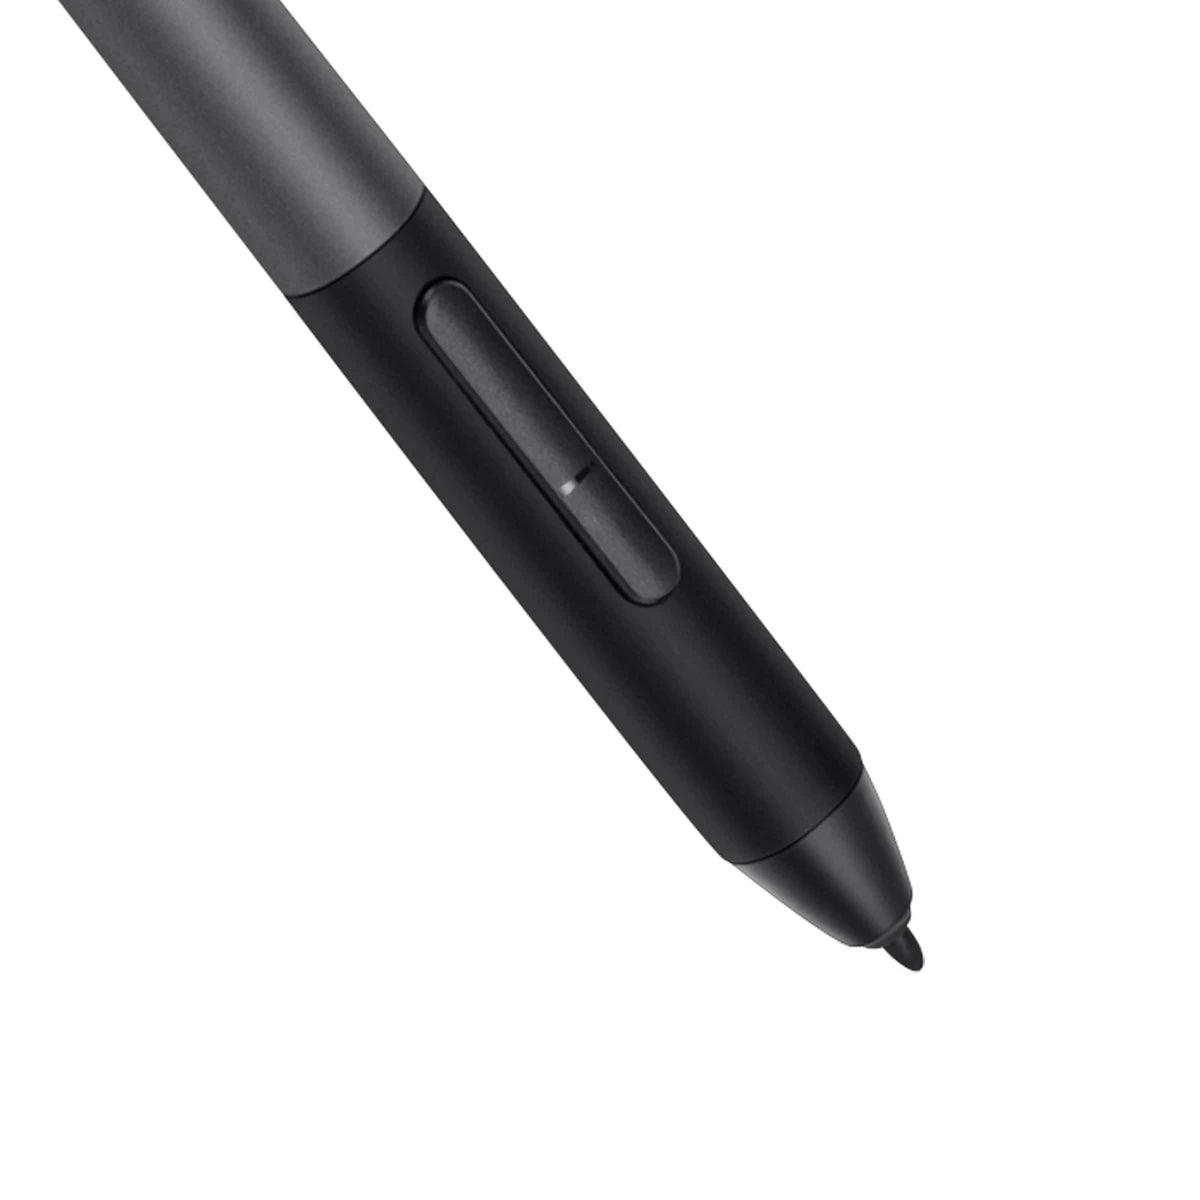 GAOMON PD1161 Pen Display